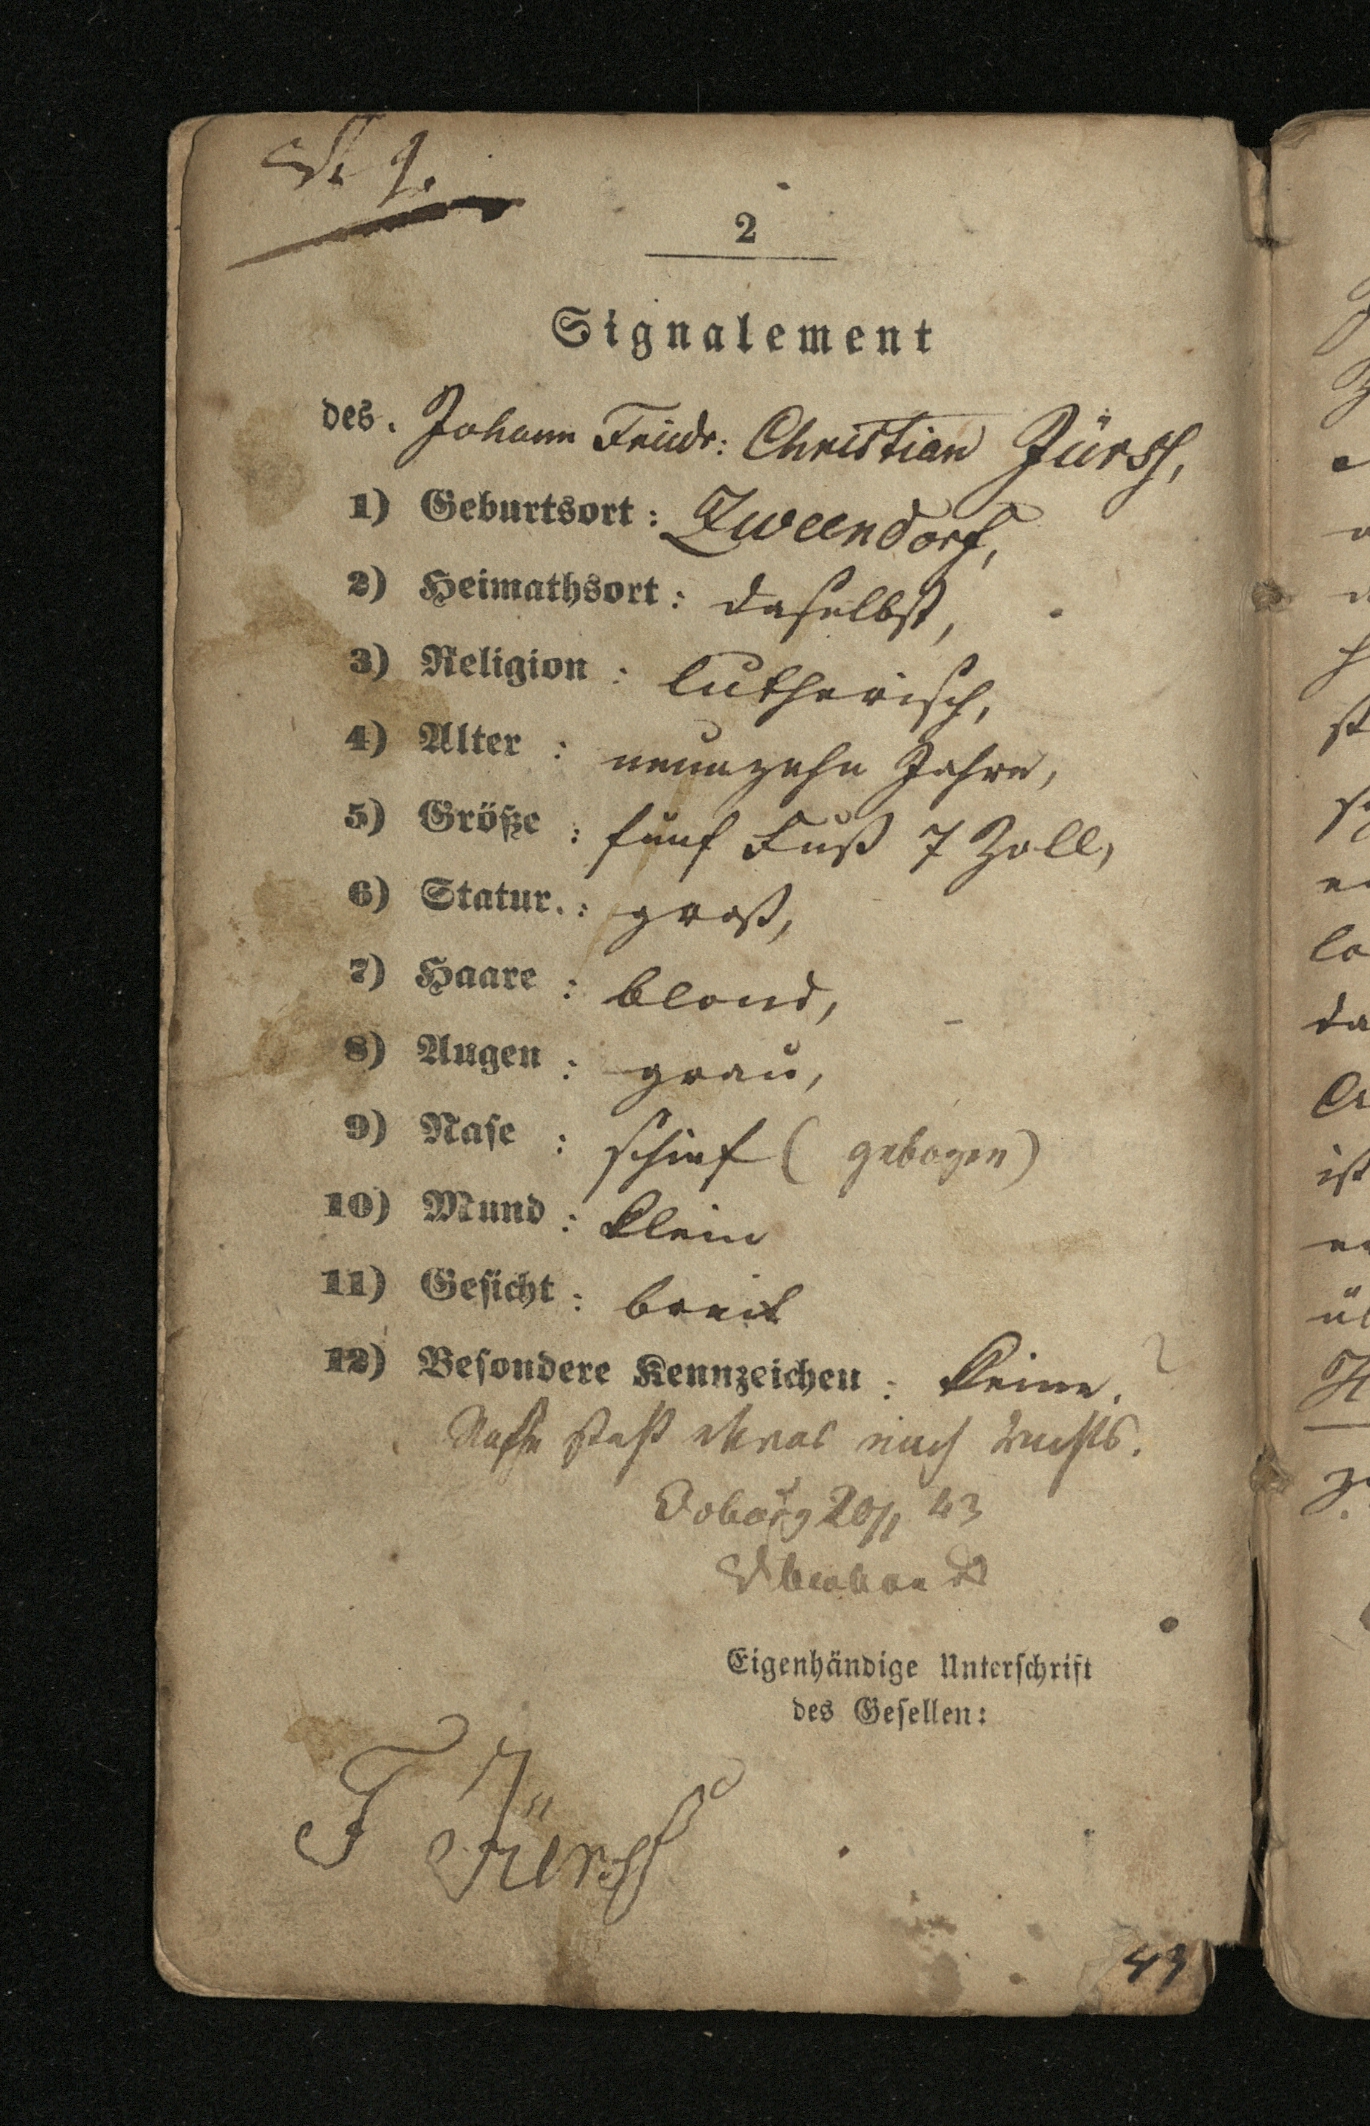 A full physical description of Juers at the time he undertook his Wanderschaft